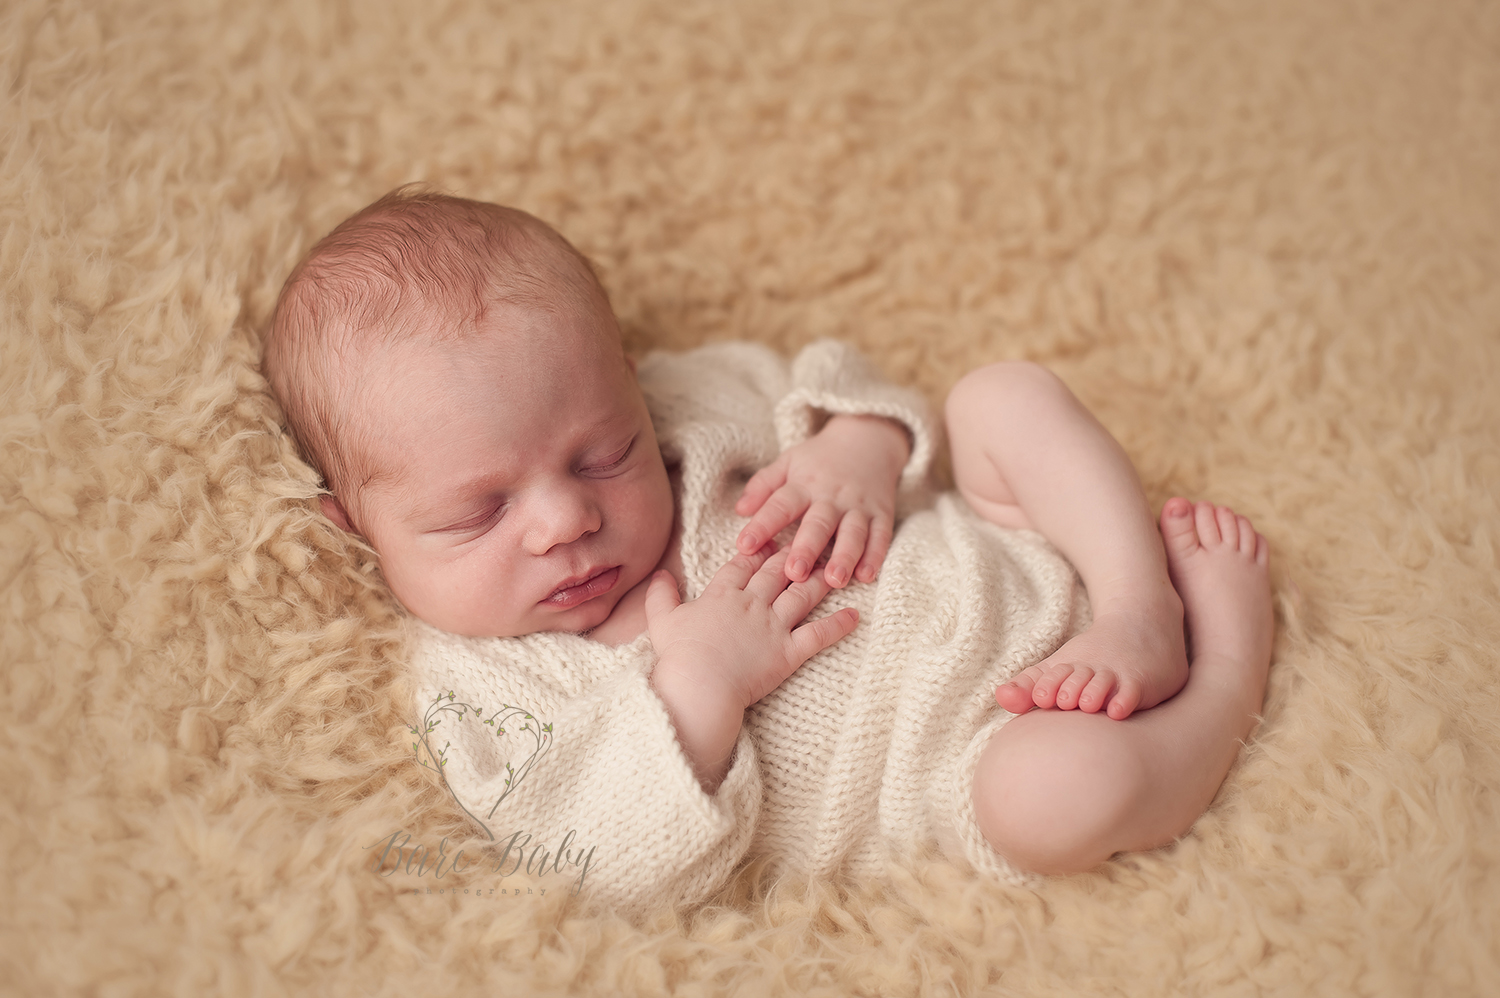 dublin-ohio-newborn-photographer.jpg